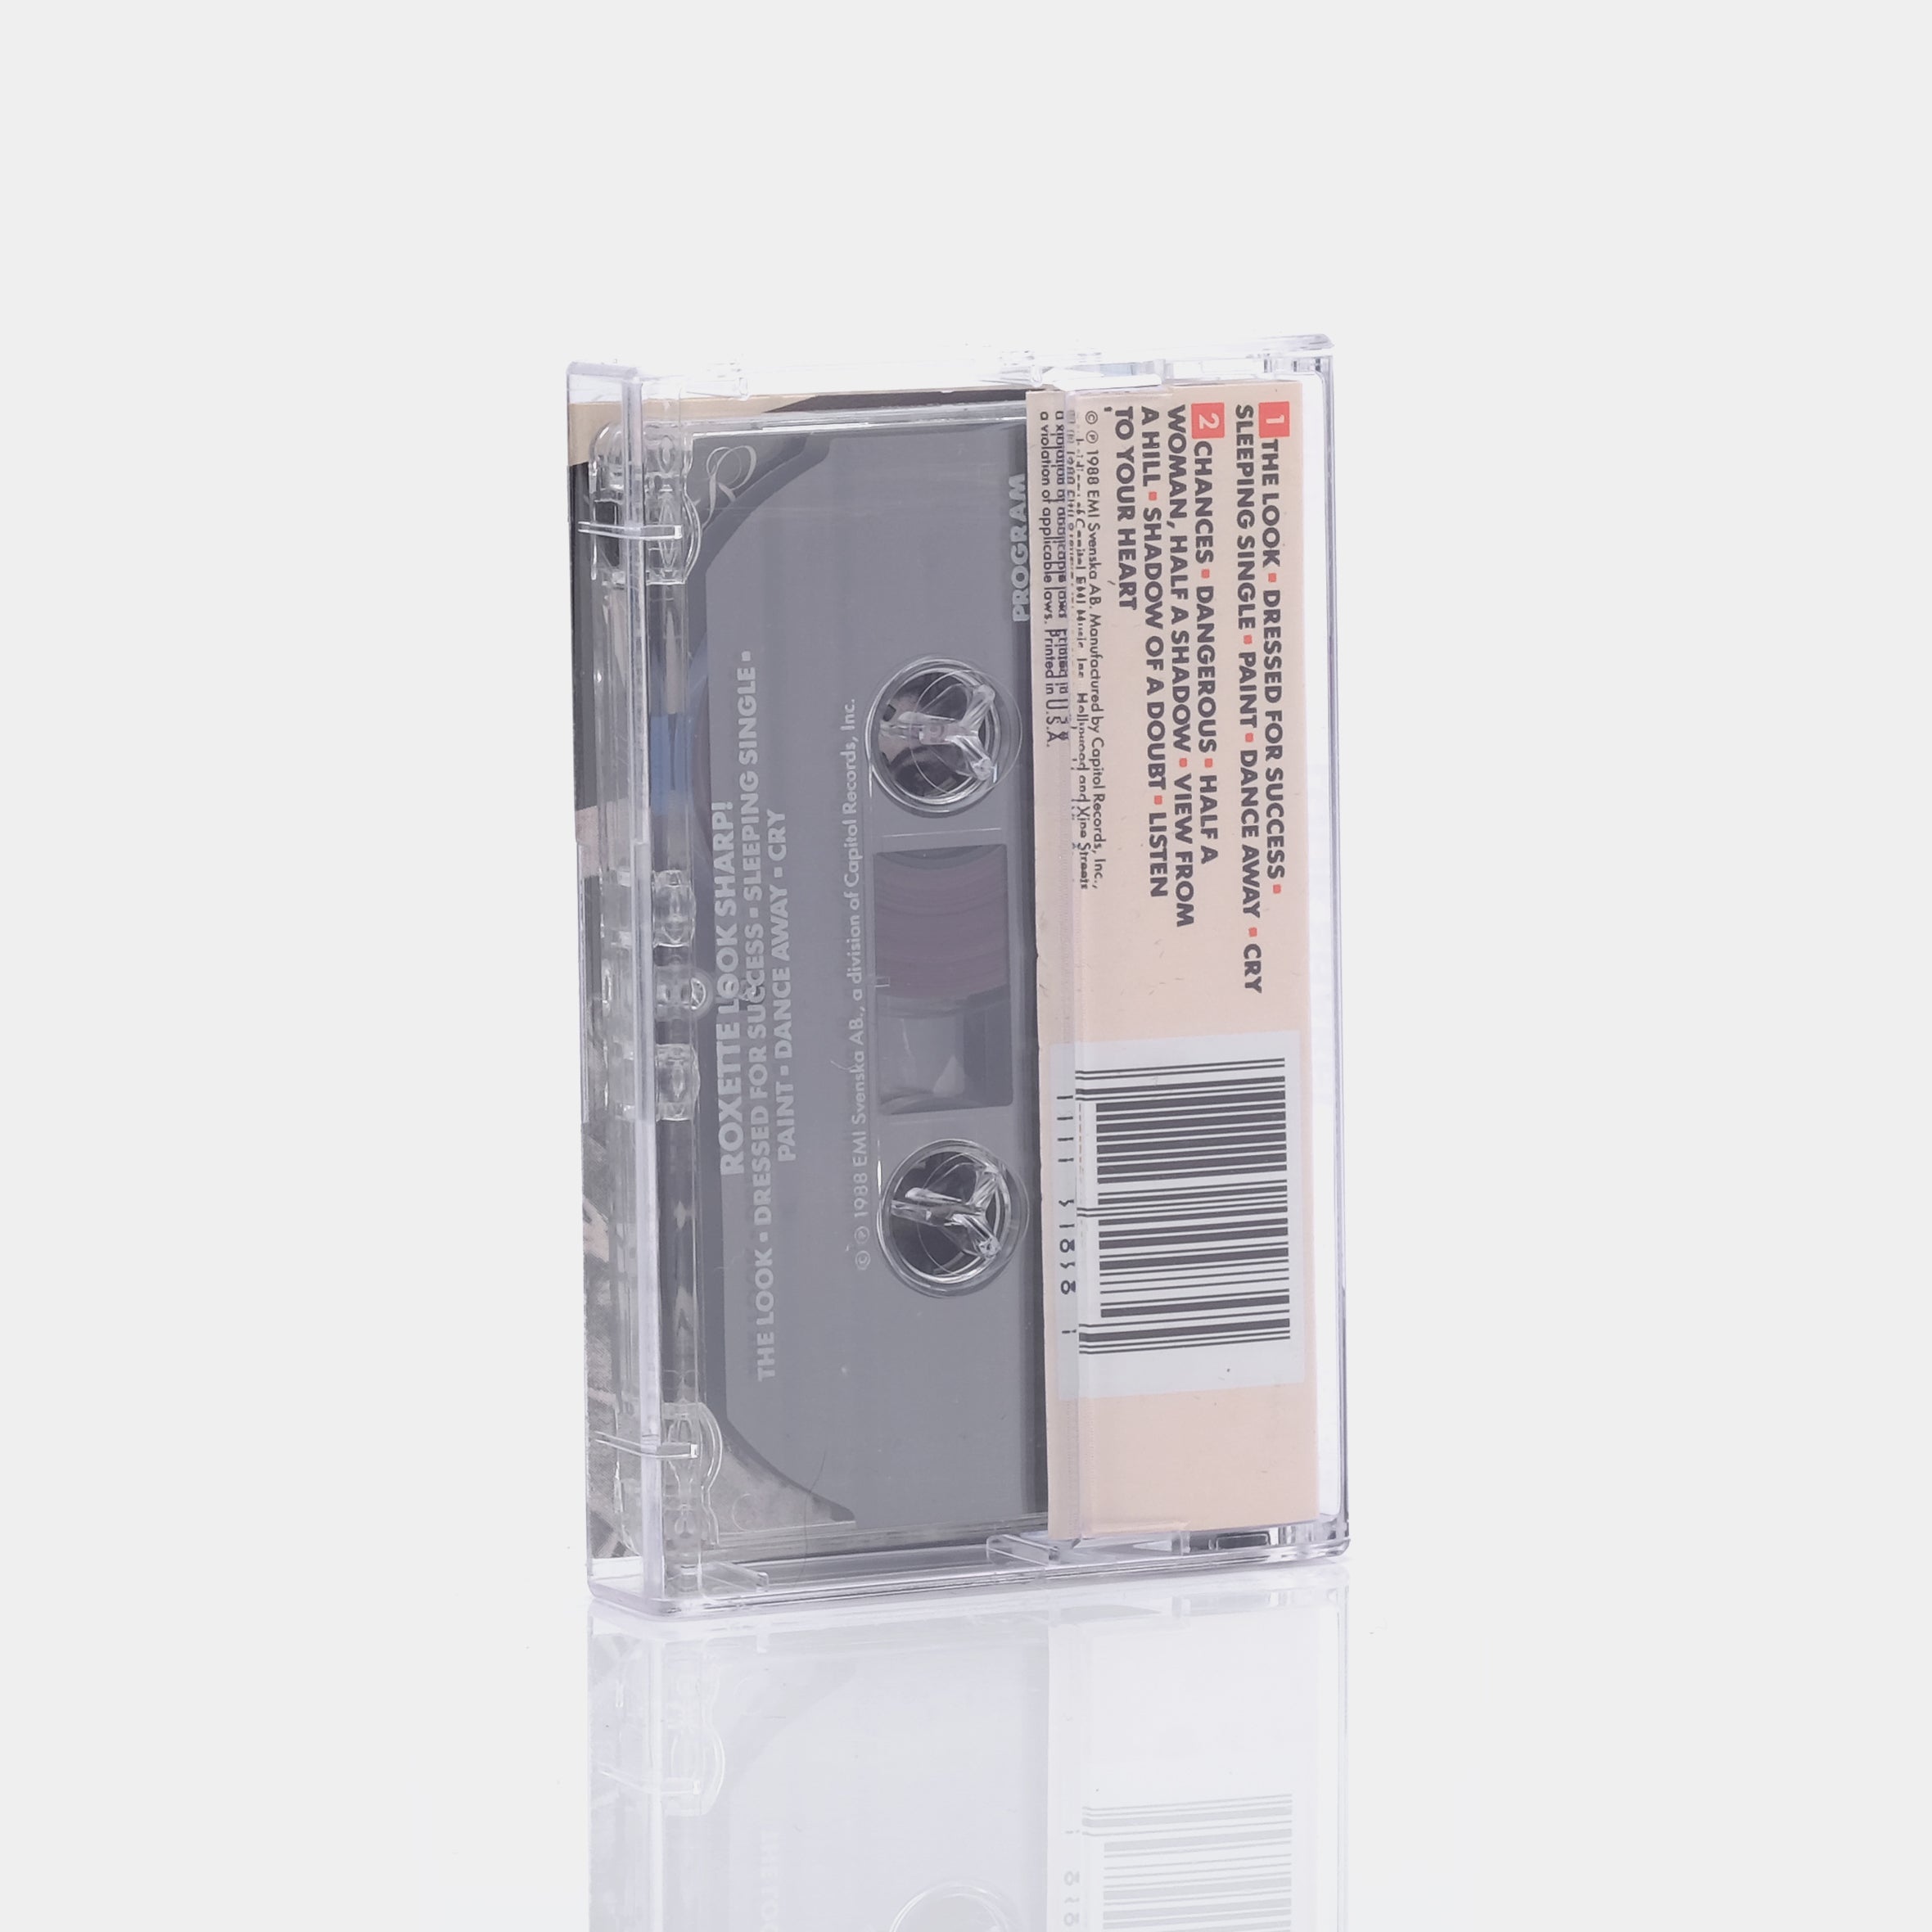 Roxette - Look Sharp! Cassette Tape